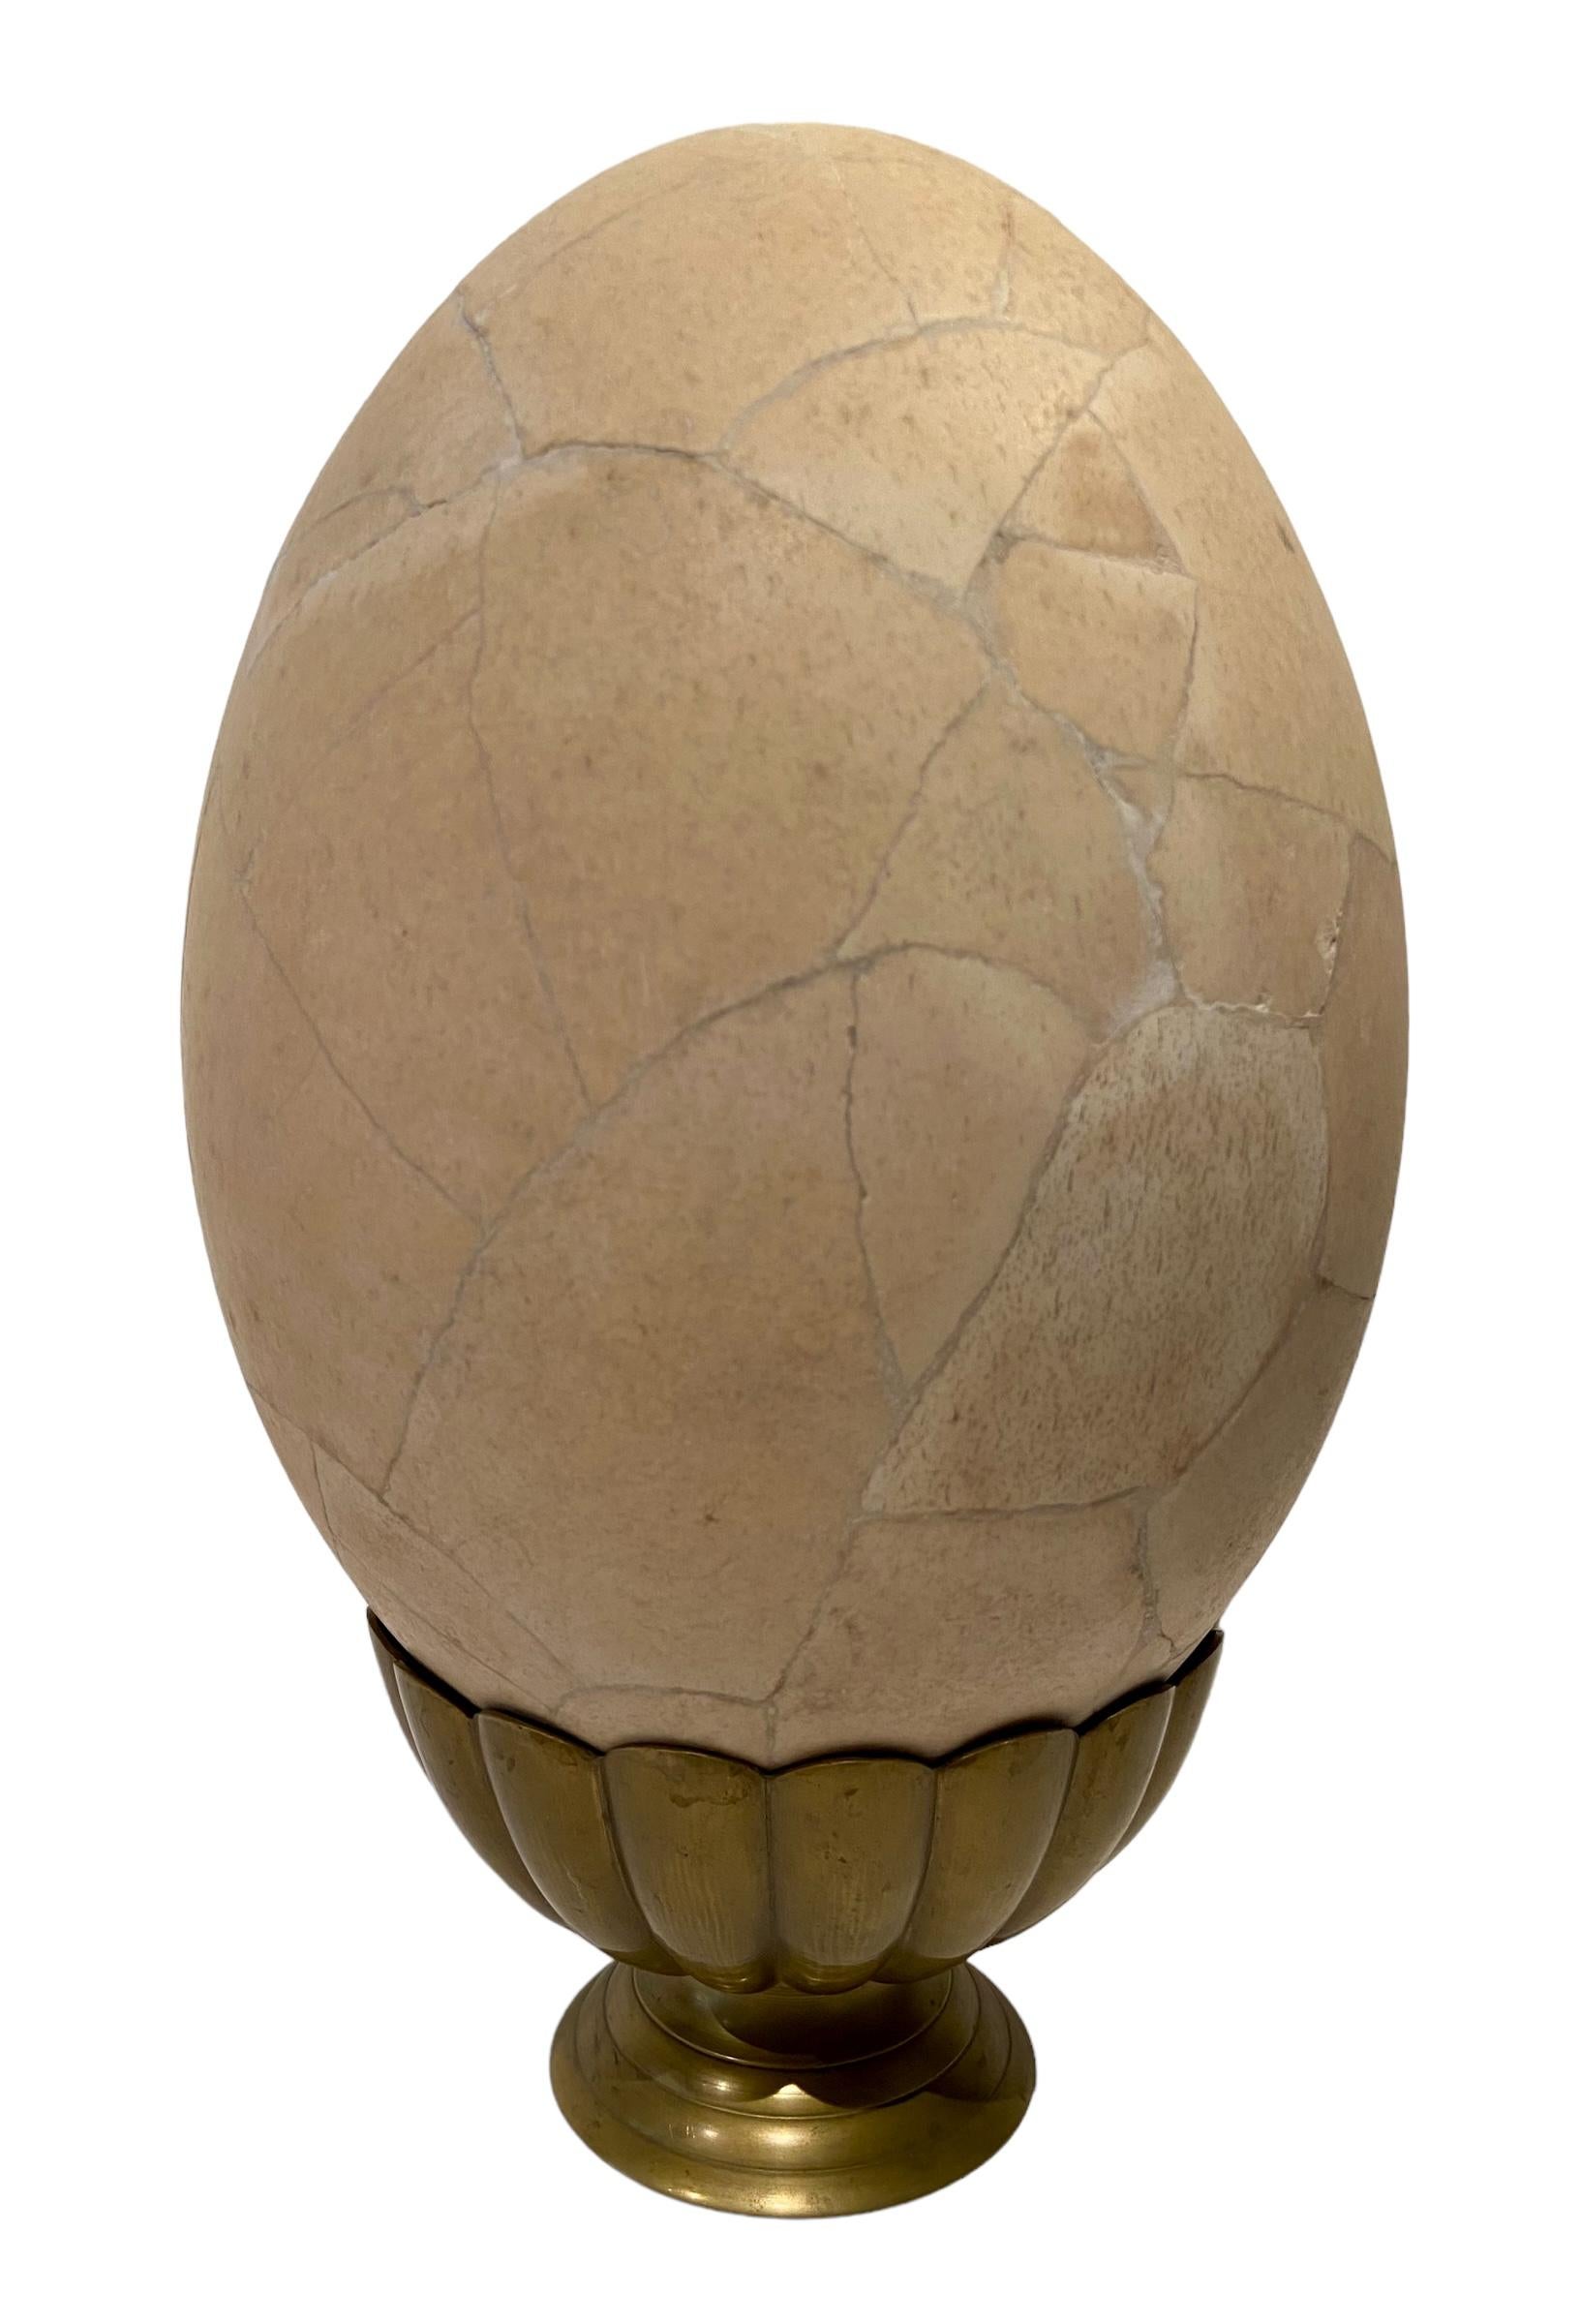 Malagasy Elephant bird egg